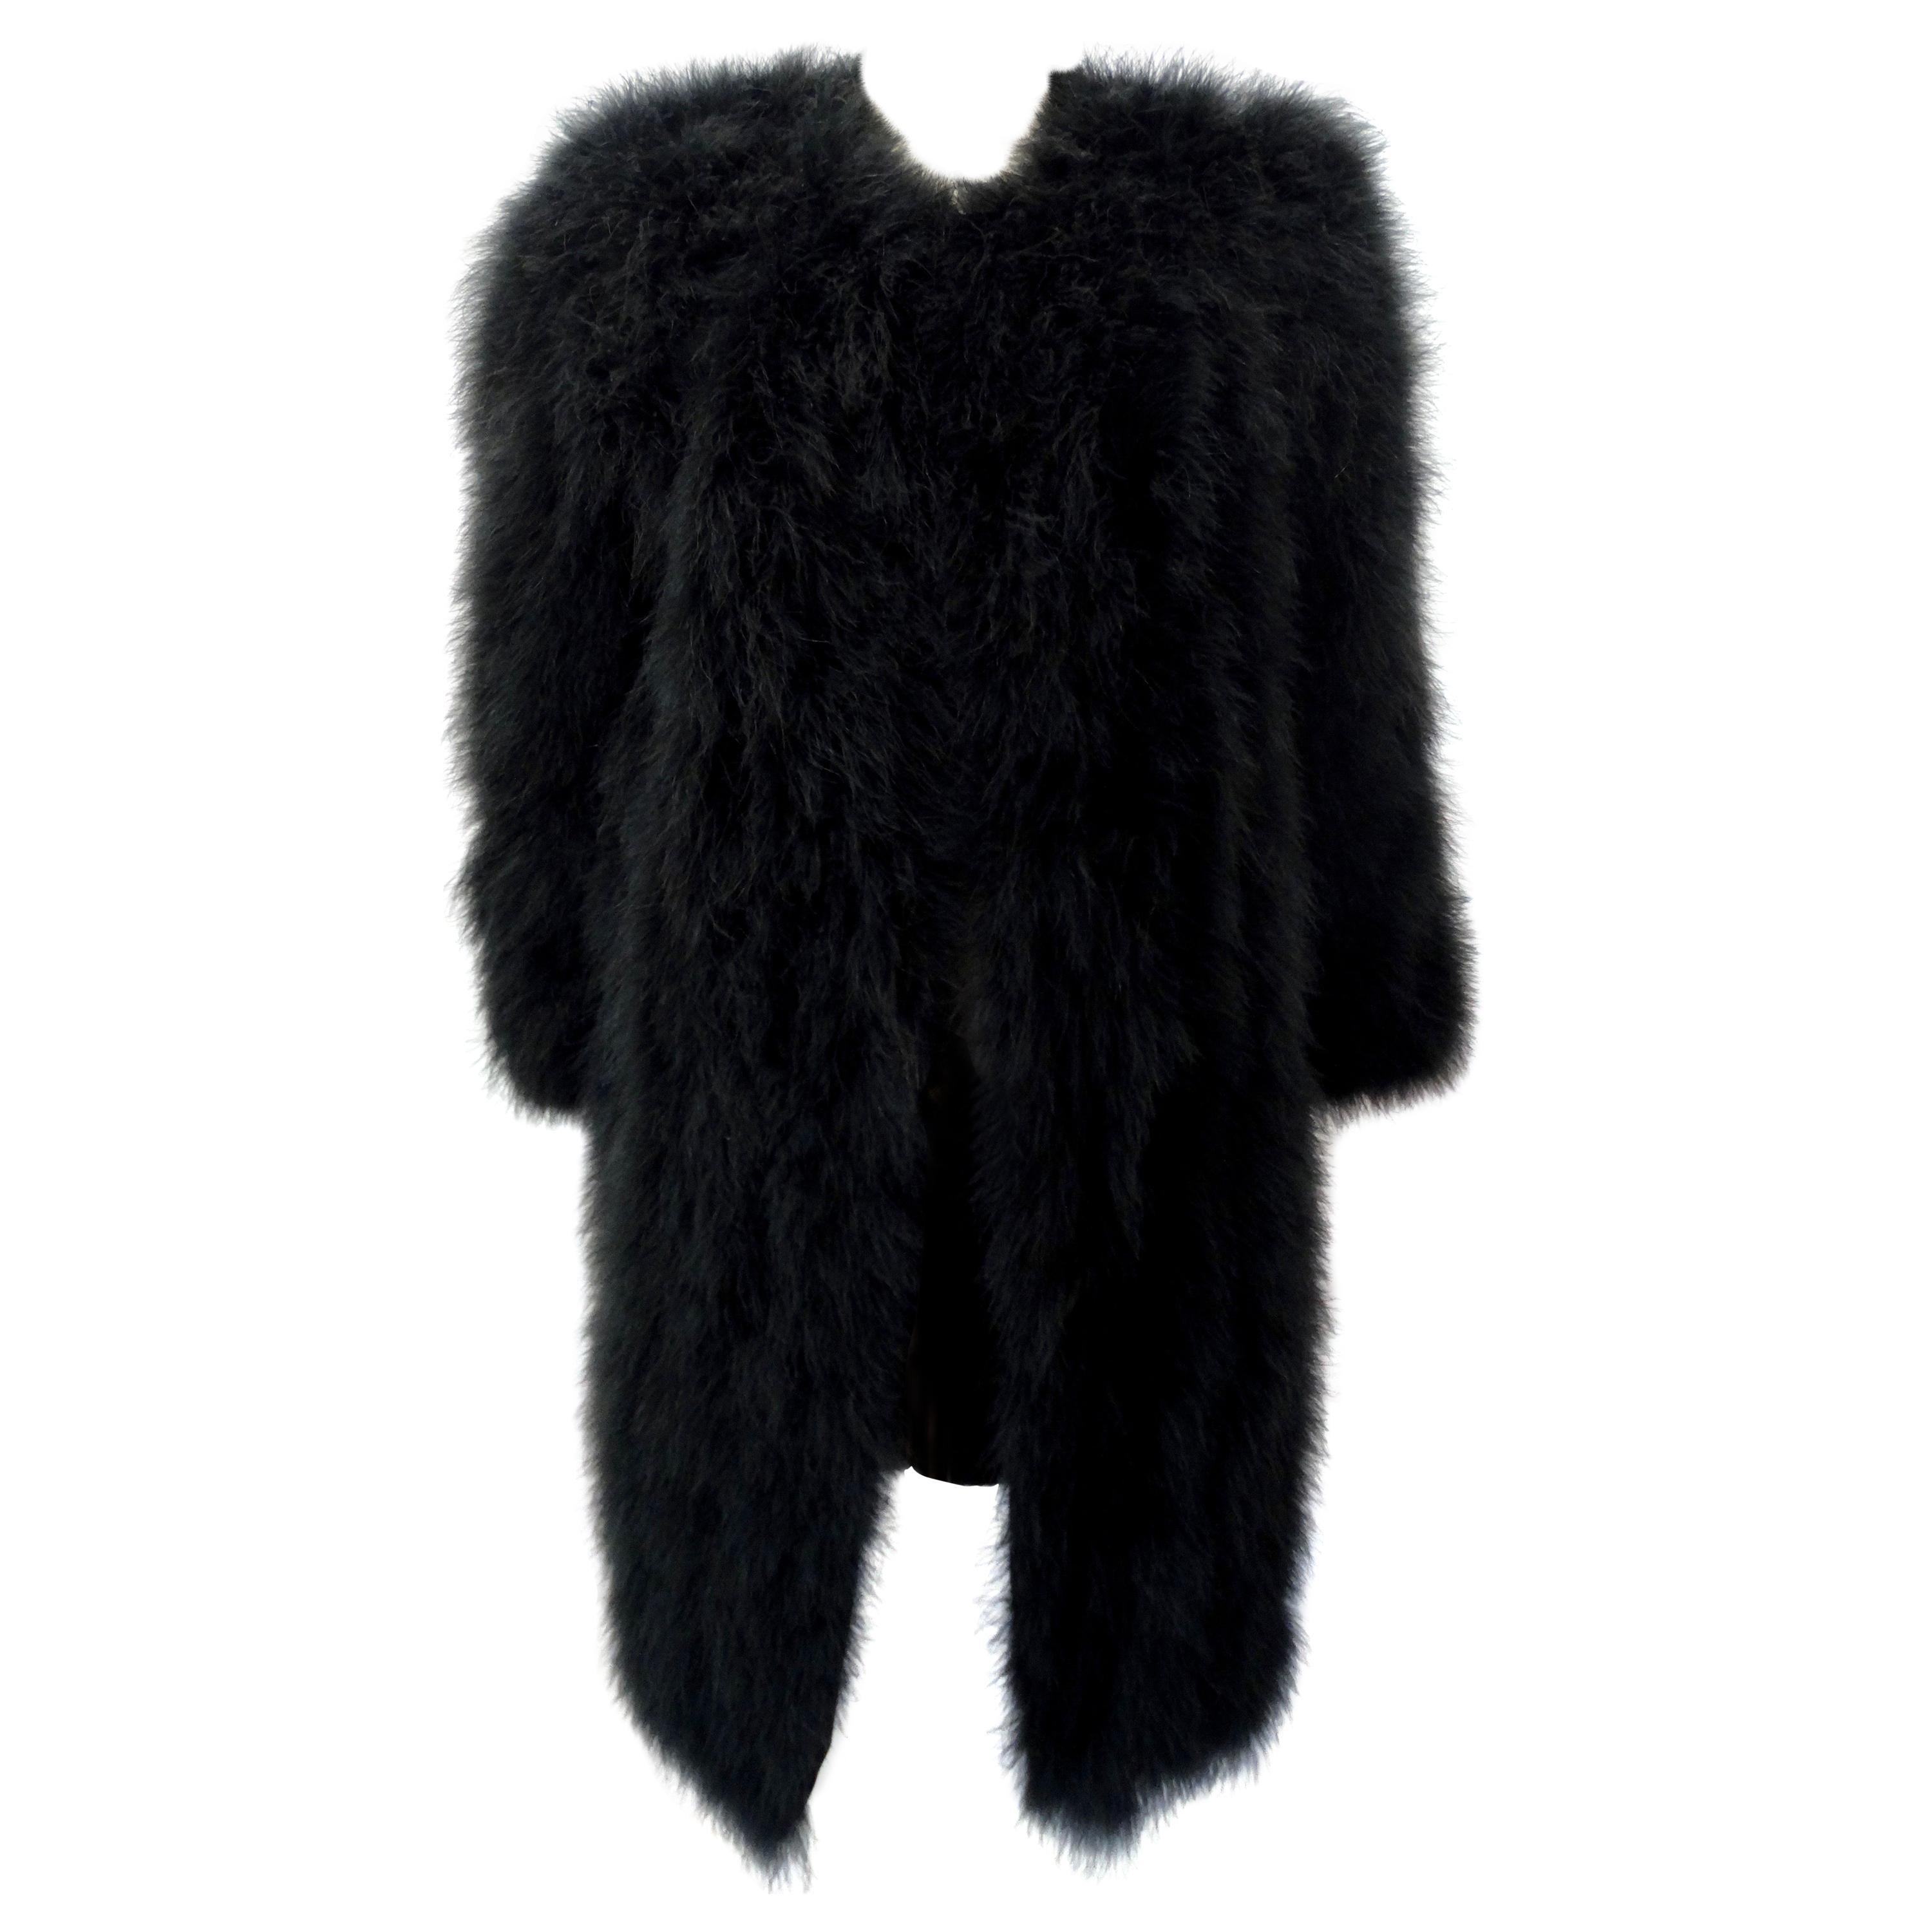 Sonia Rykiel 1980s Black Marabou Feather Coat